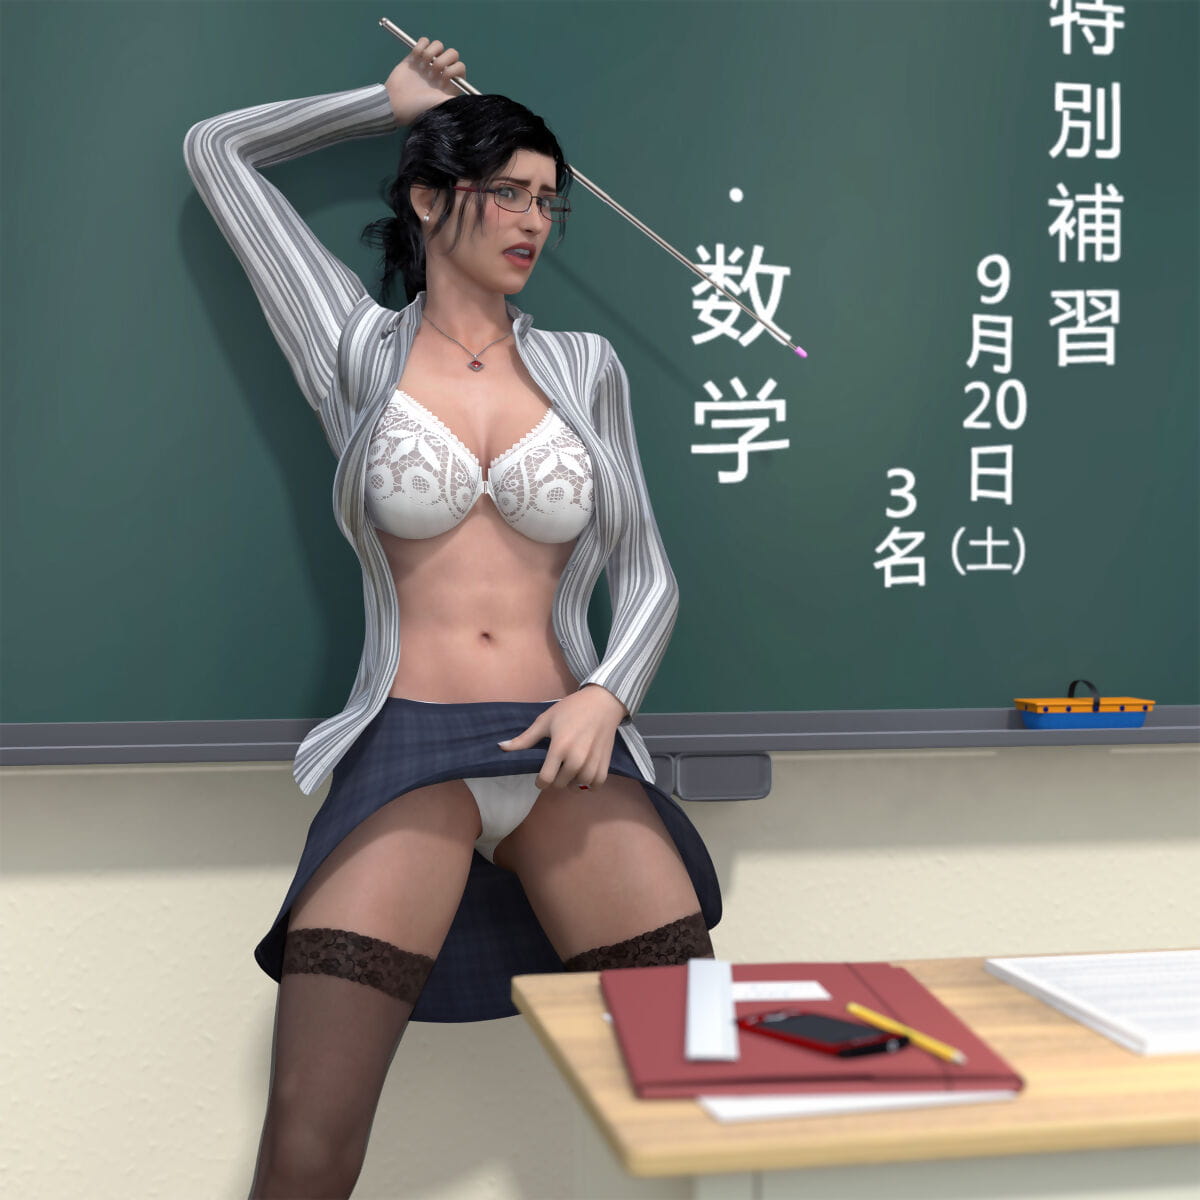 Minoru Hiromi Female Feacher 1 - 9-20 3D speechless page 1